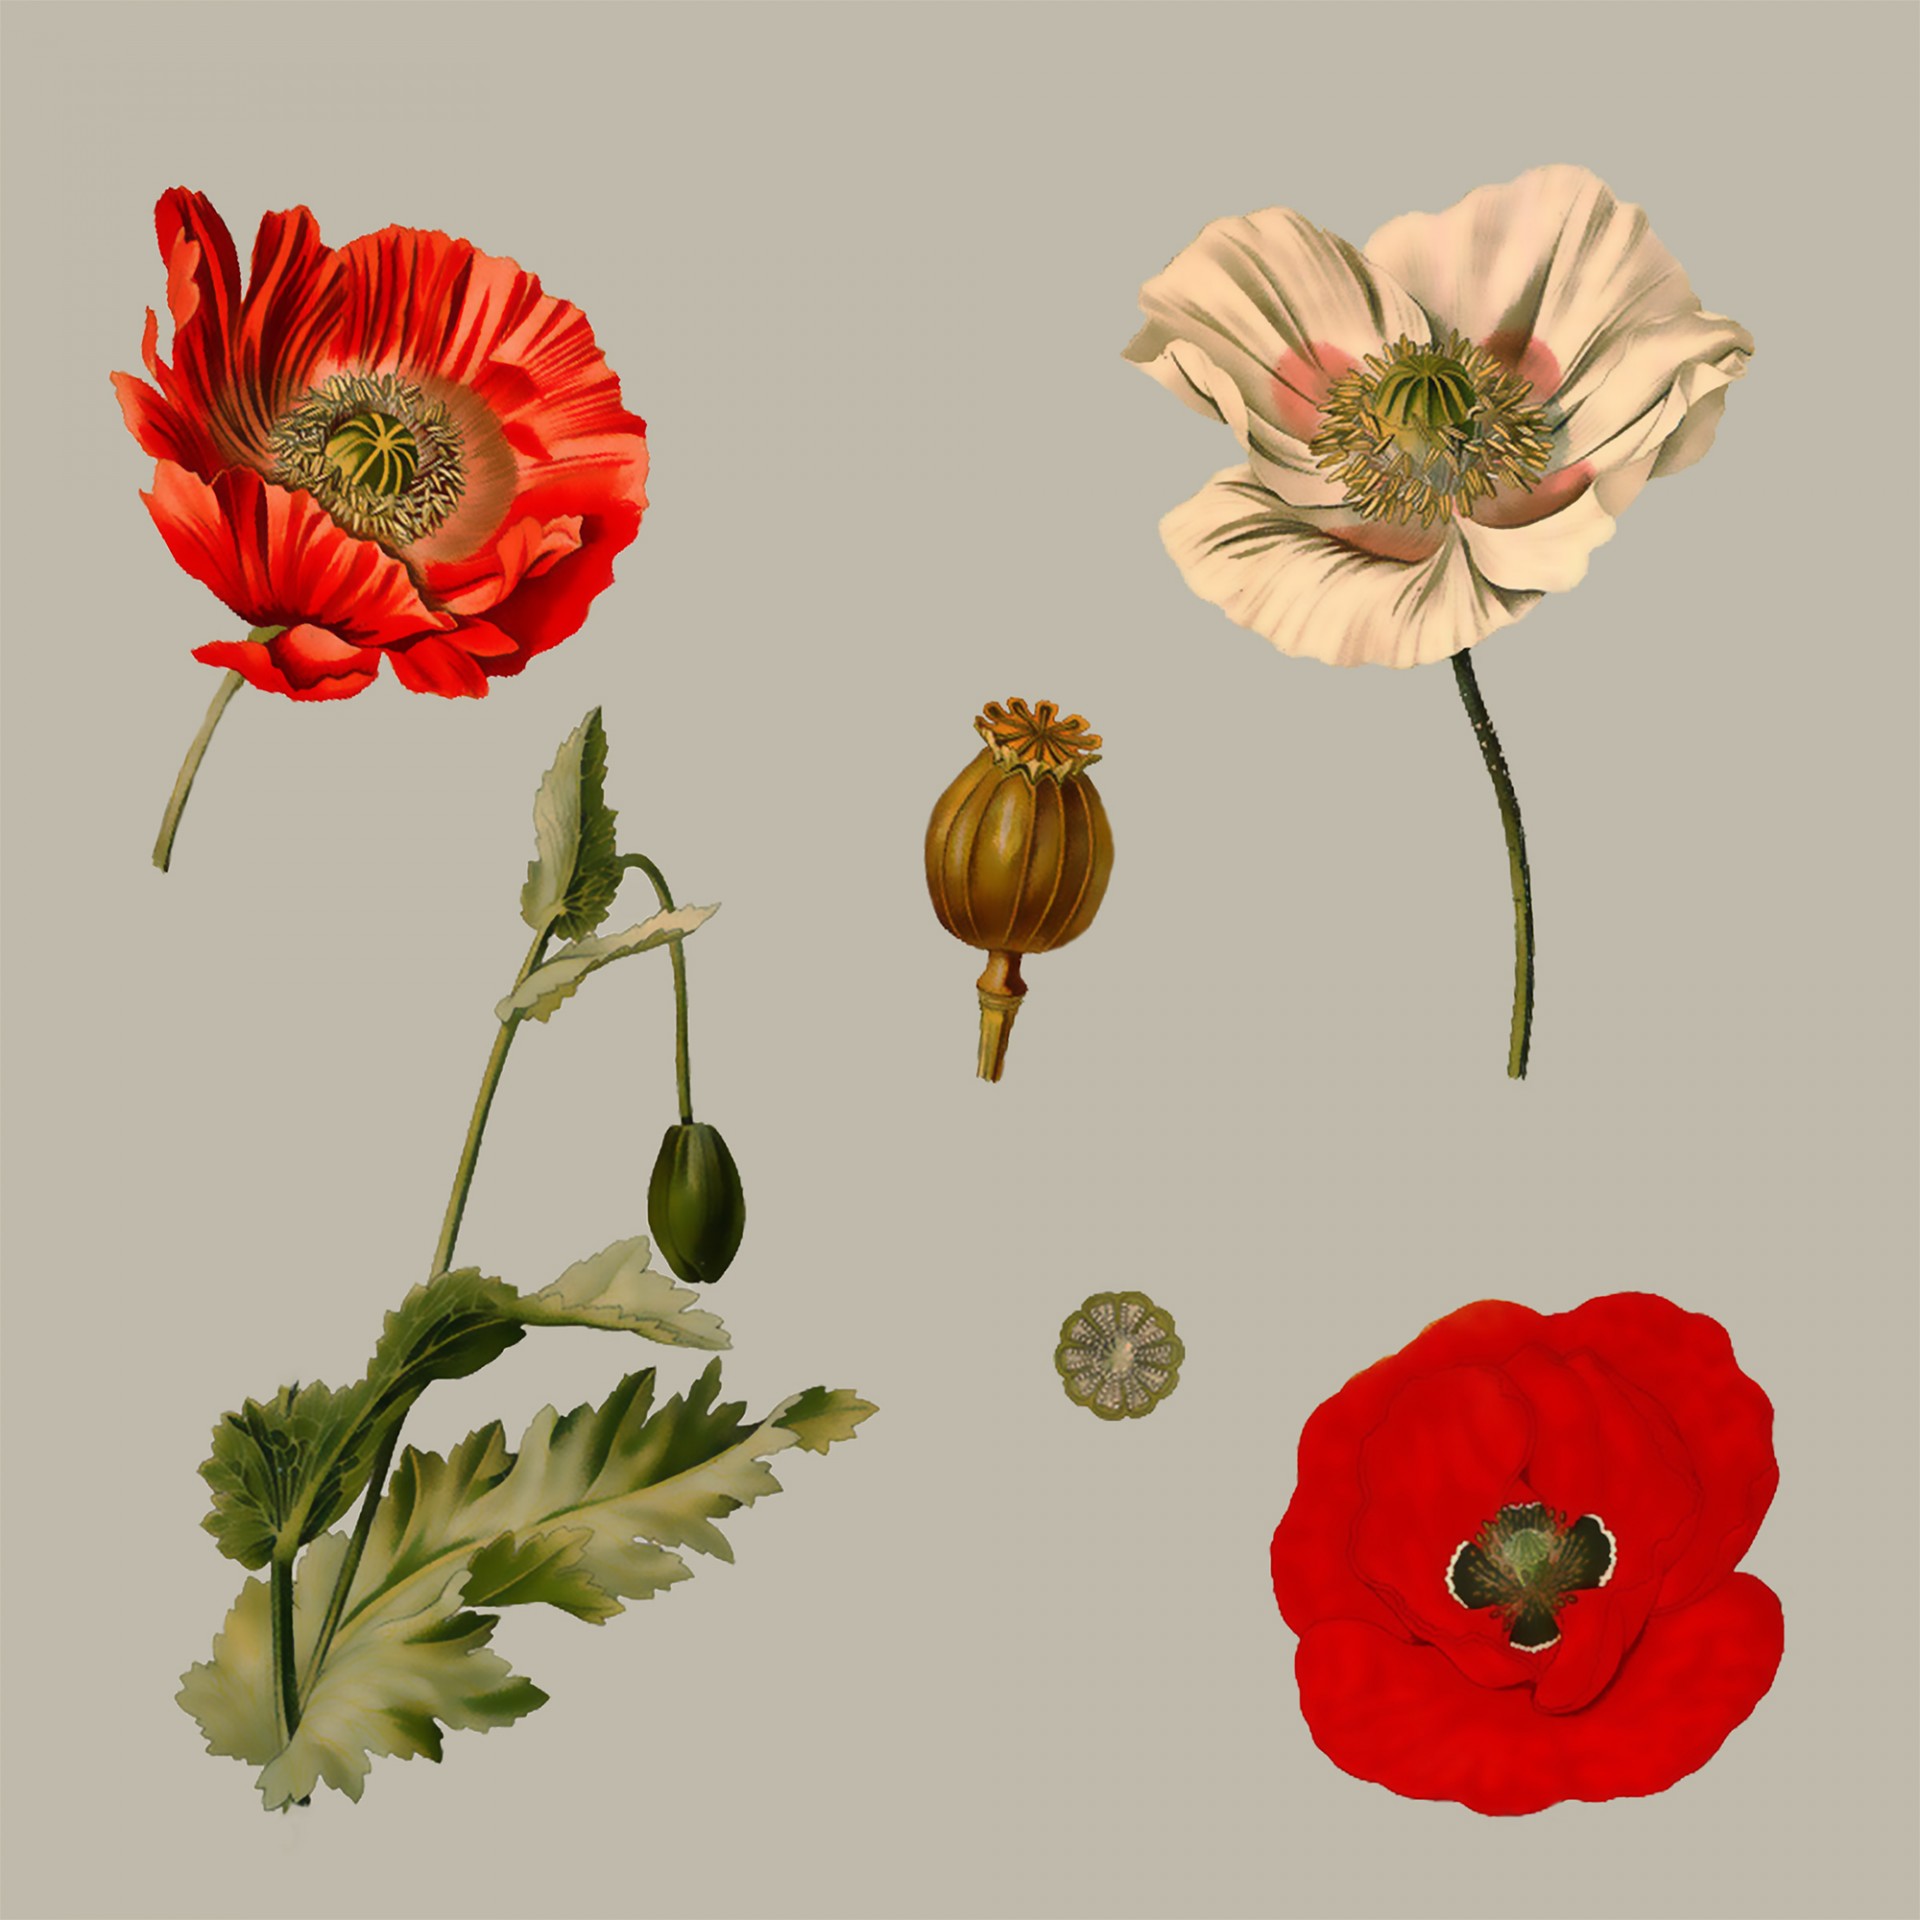 Poppy Flowers Illustration